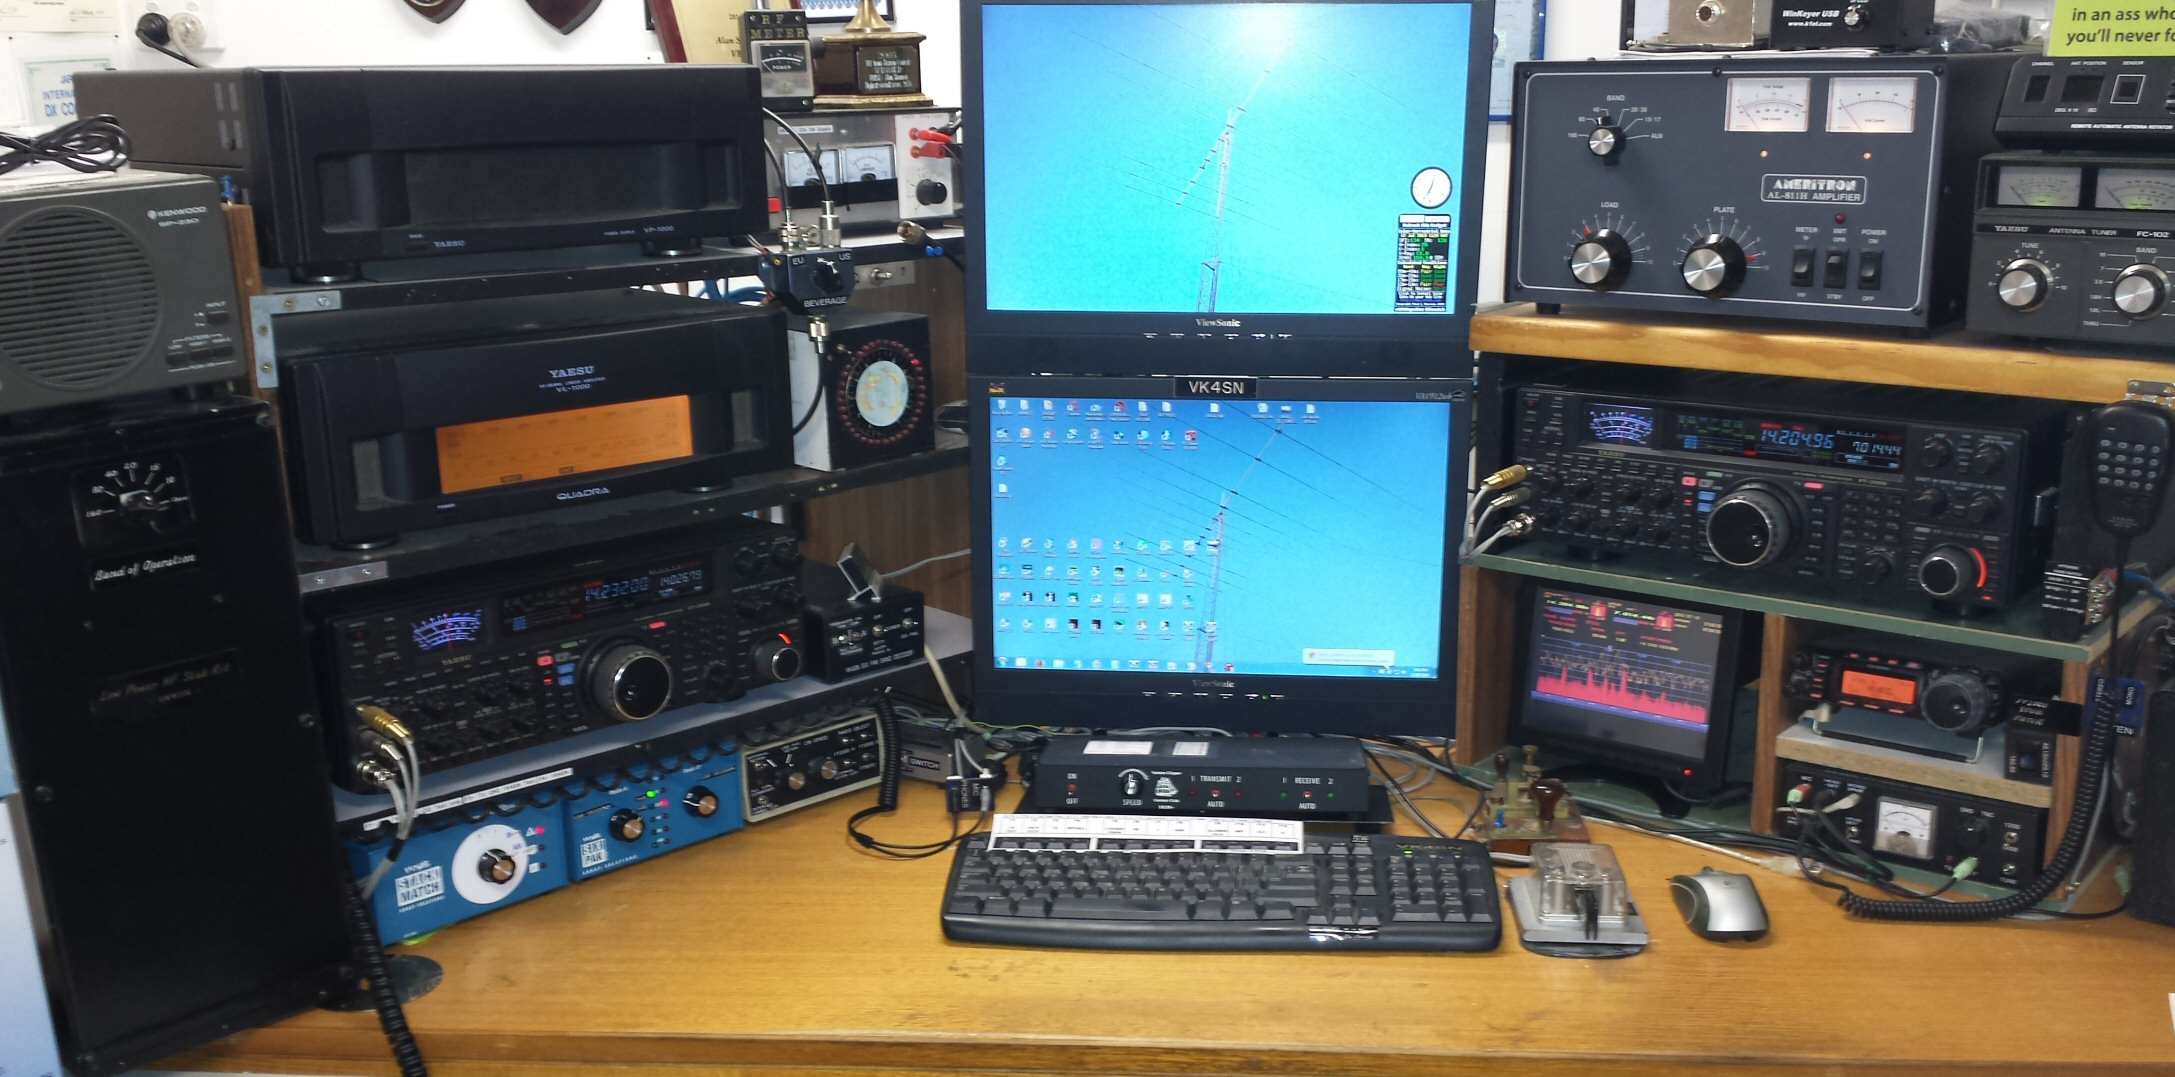 my shack vk4sn amateur radio station 1